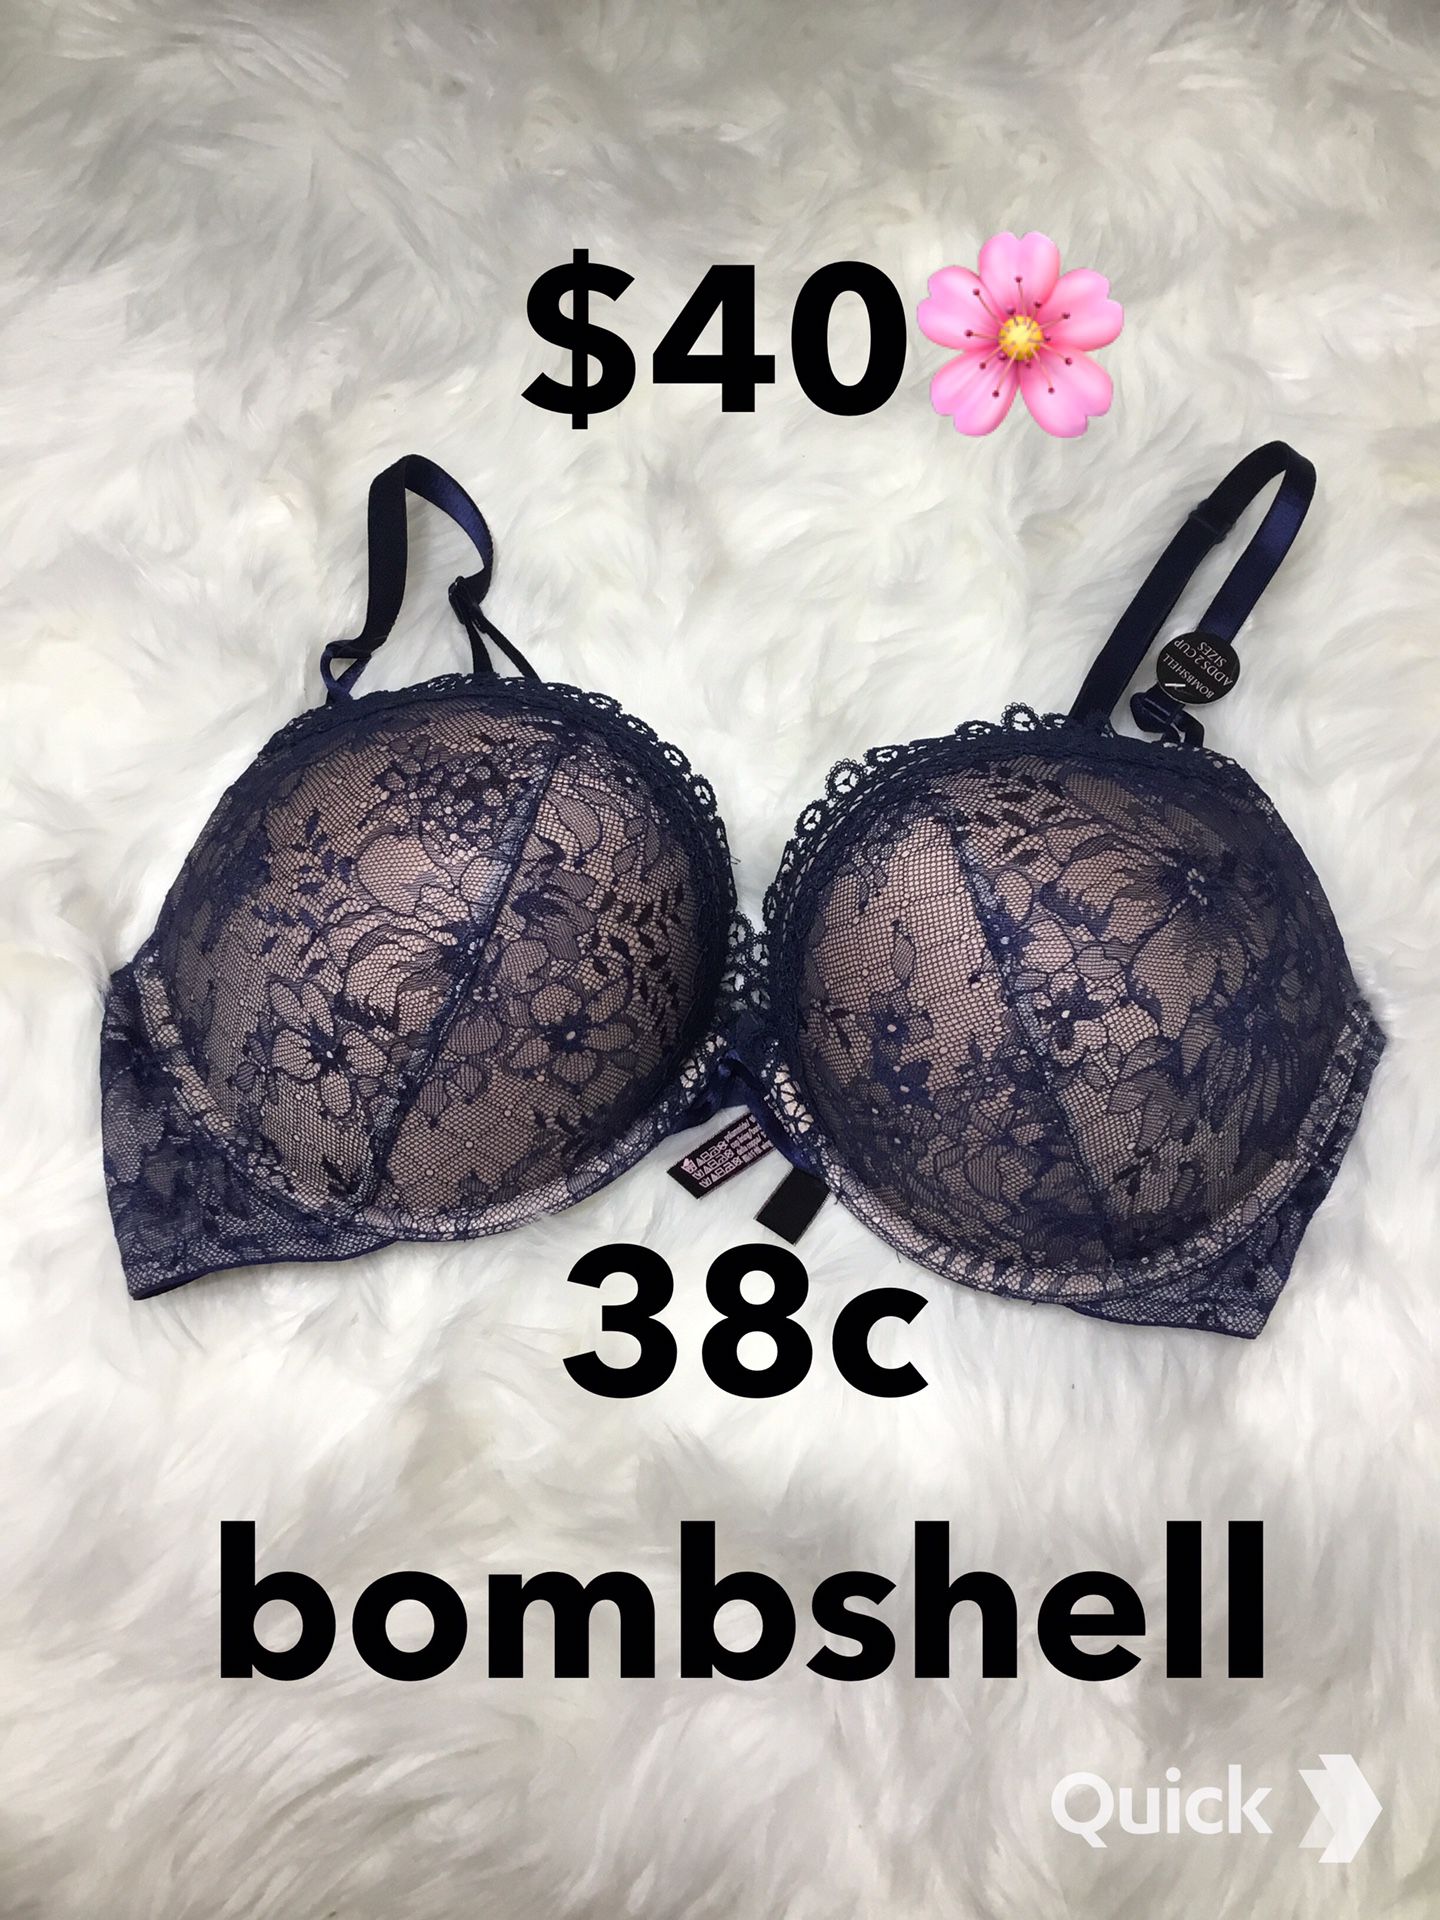 New bra Victoria secret size 38c ❤️❤️❤️FIRM price ✔️